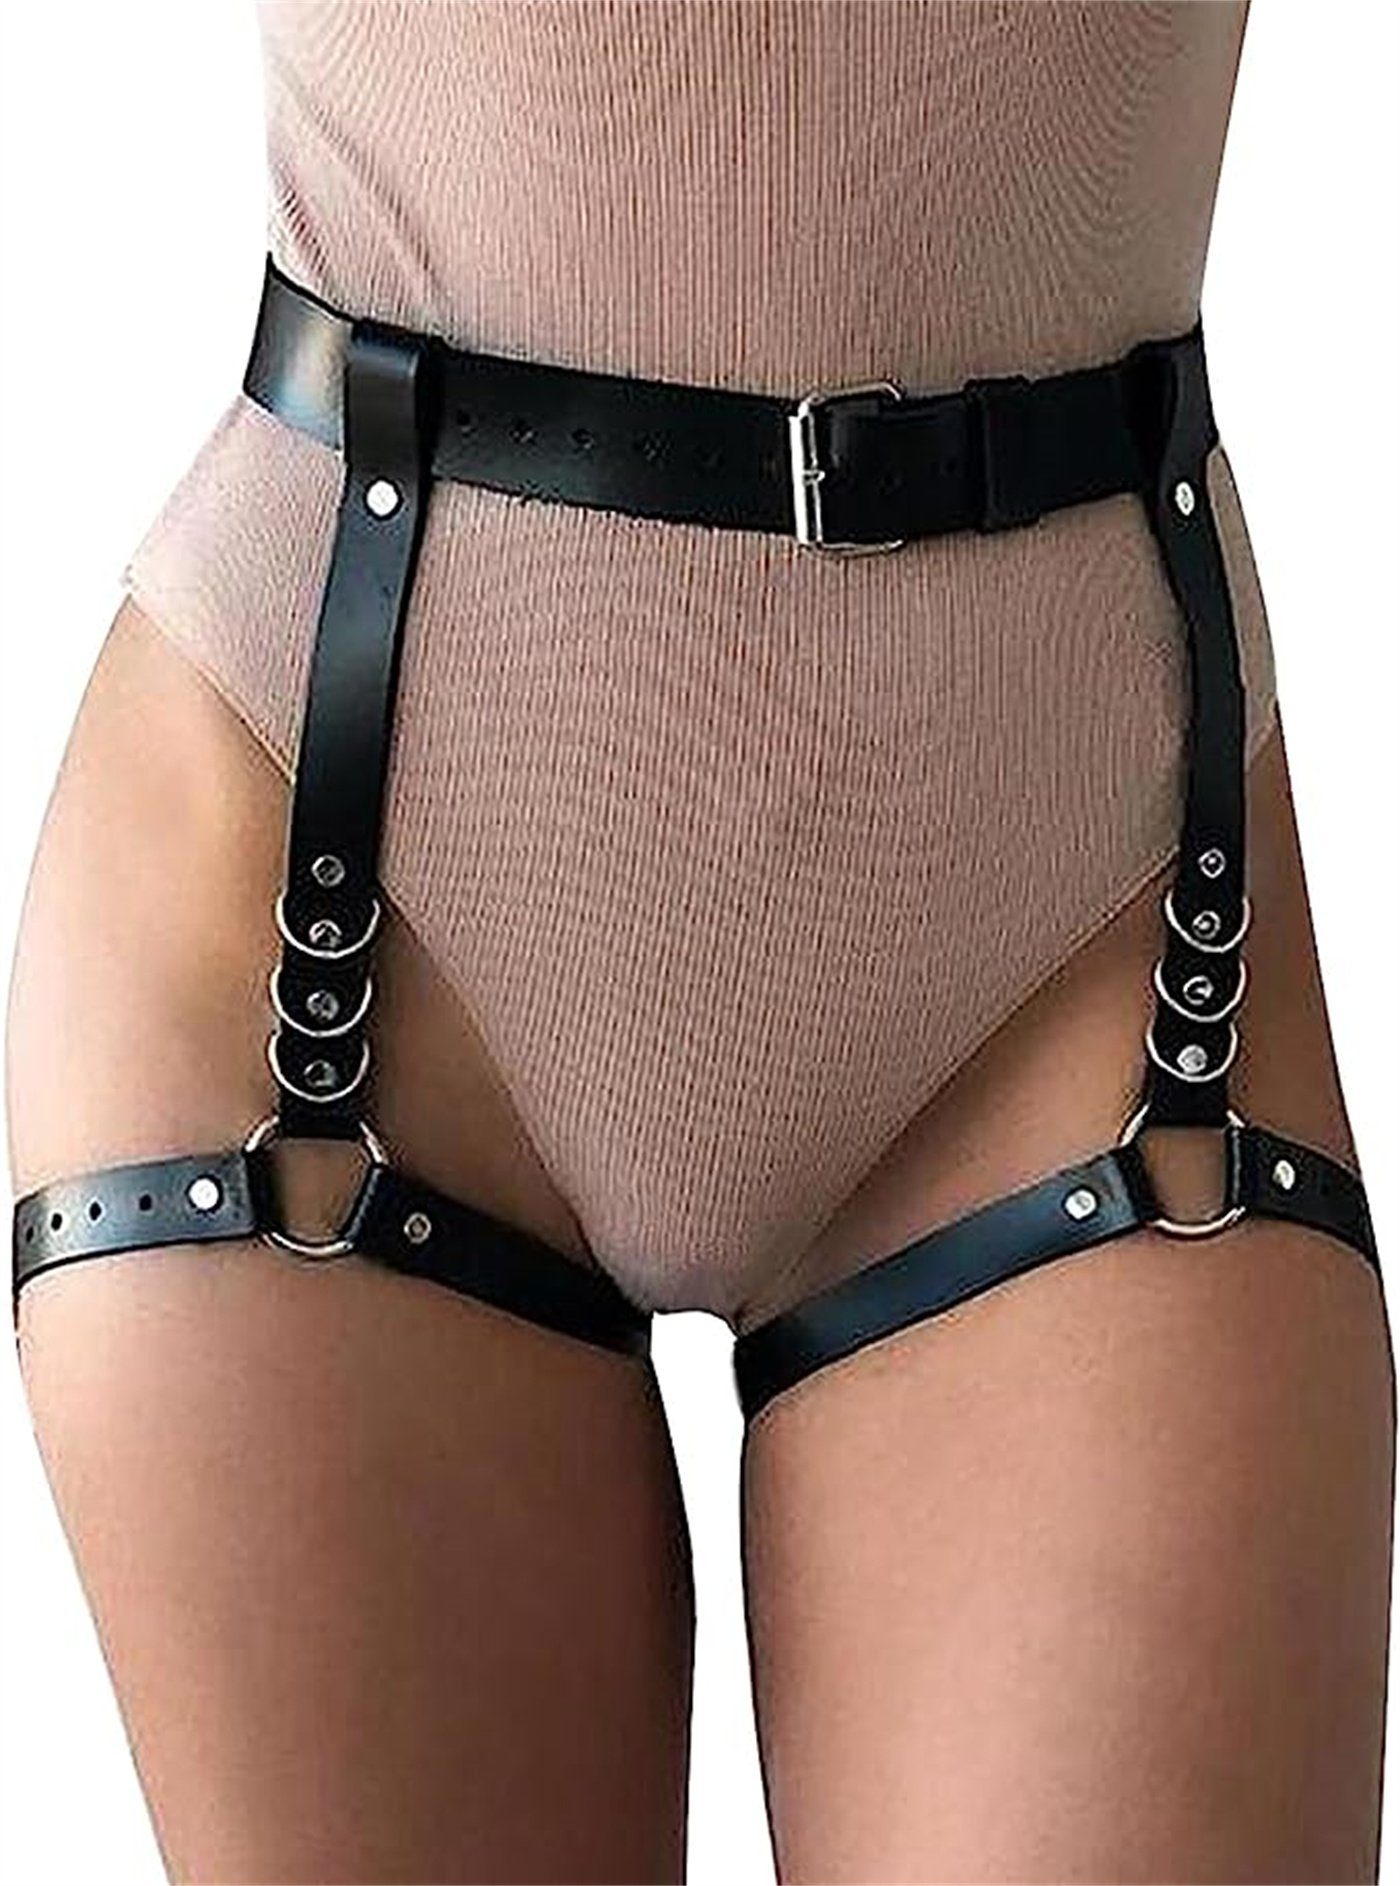 mit Harness inspink Sexy Ketten Frauen Hüfte Kettengürtel Leder Gürtel